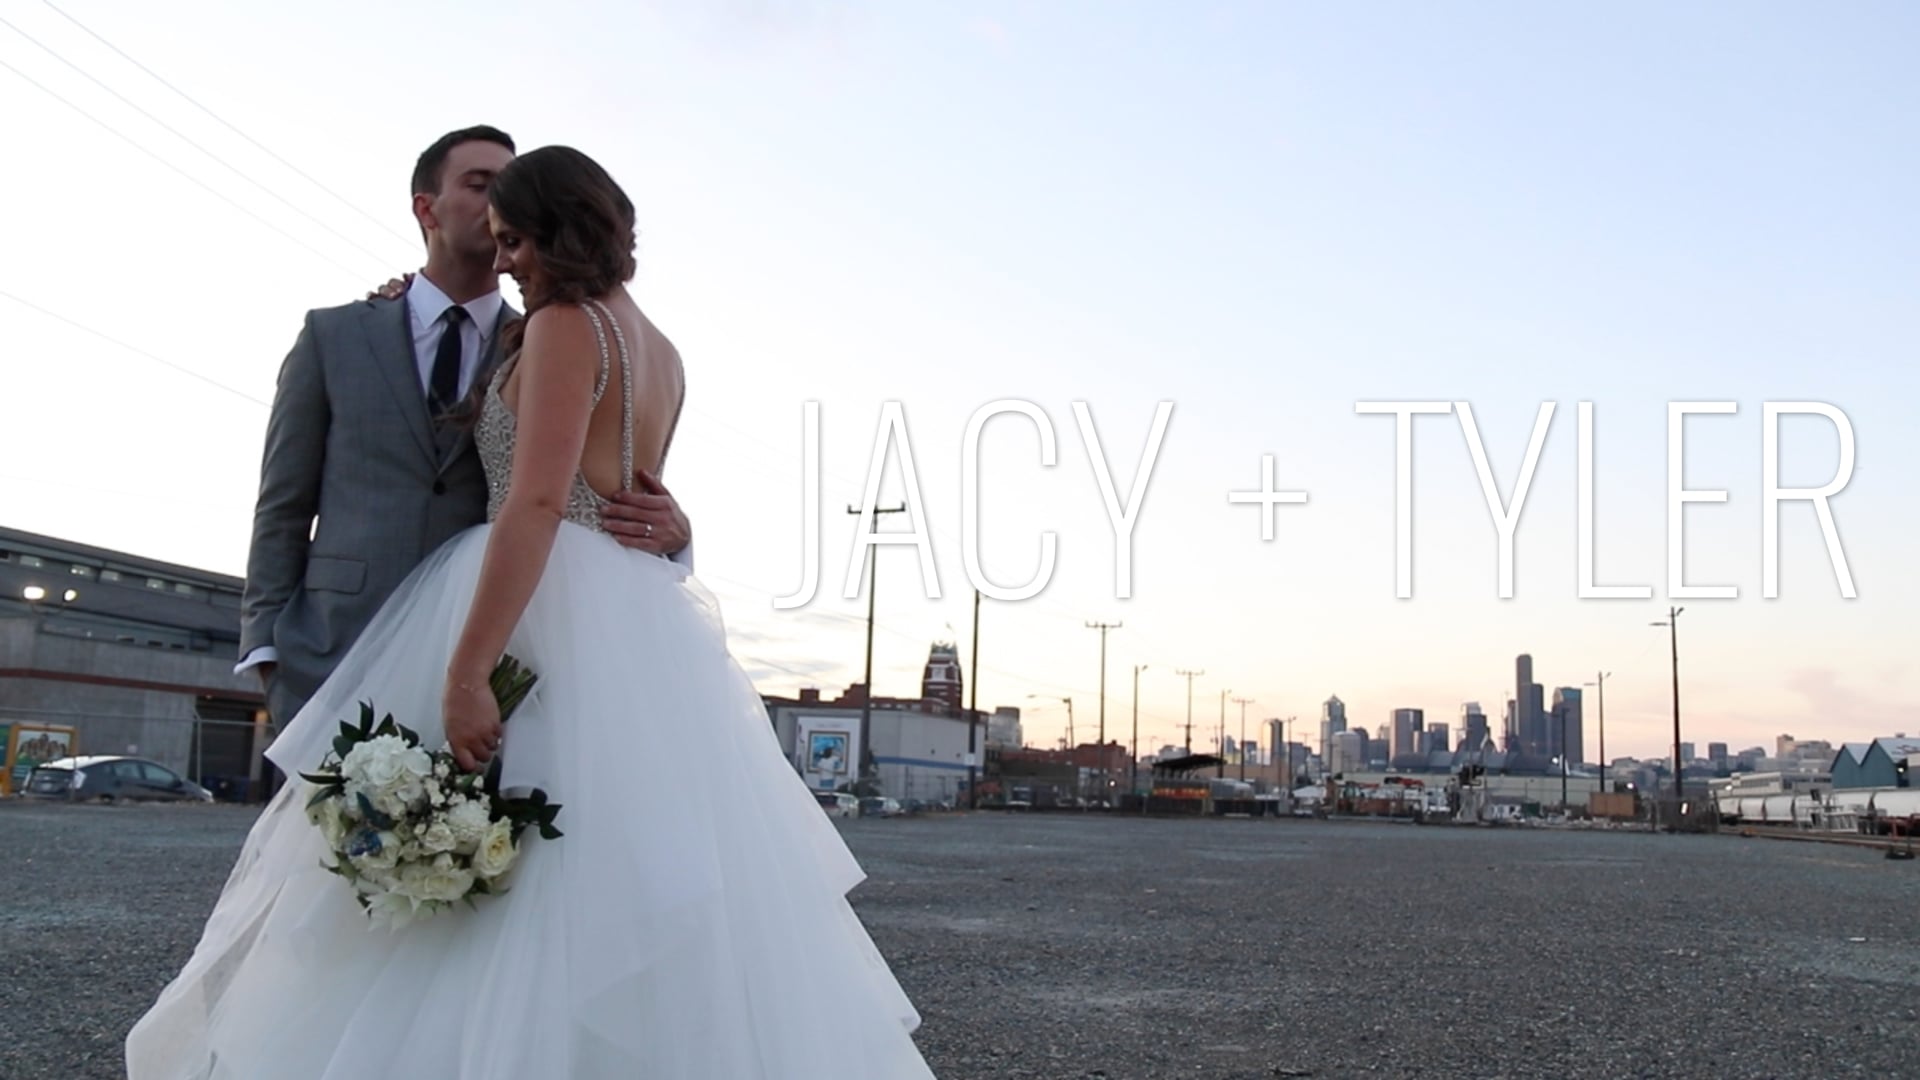 Jacy + Tyler // WEDDING HIGHLIGHTS